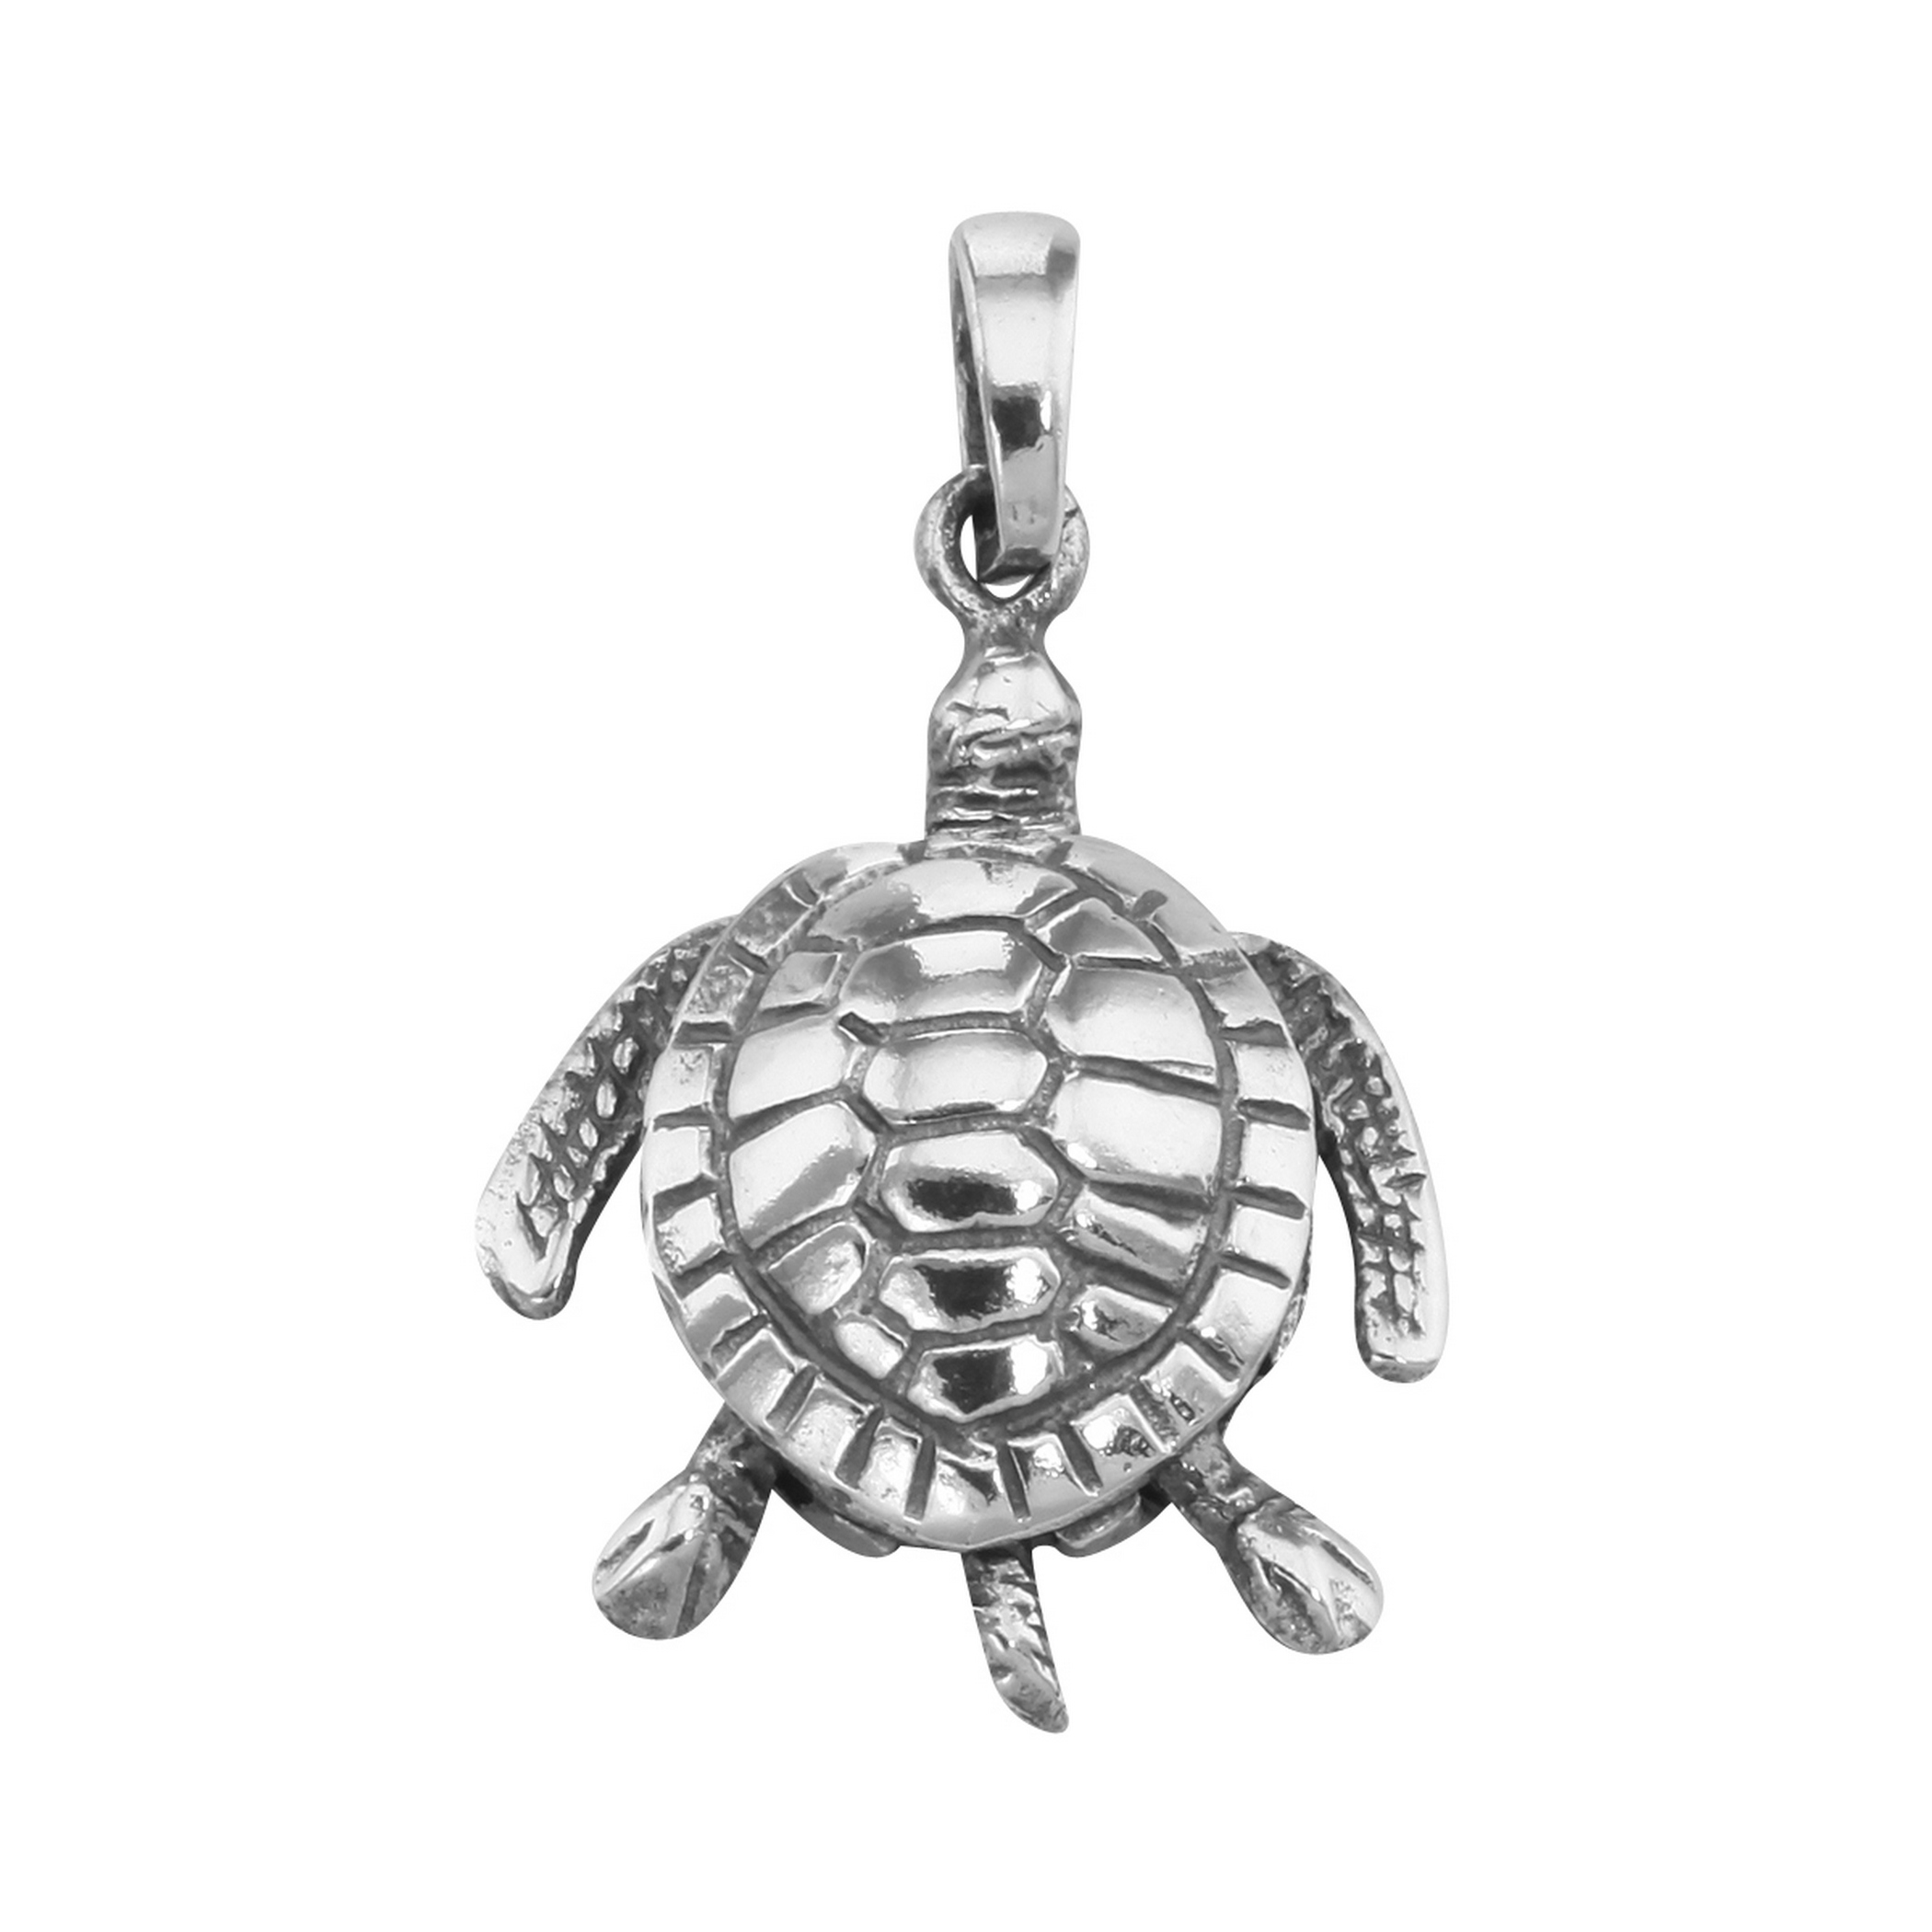 Moveable Sea Turtle Charm Keychain – Sea Turtle, Inc.